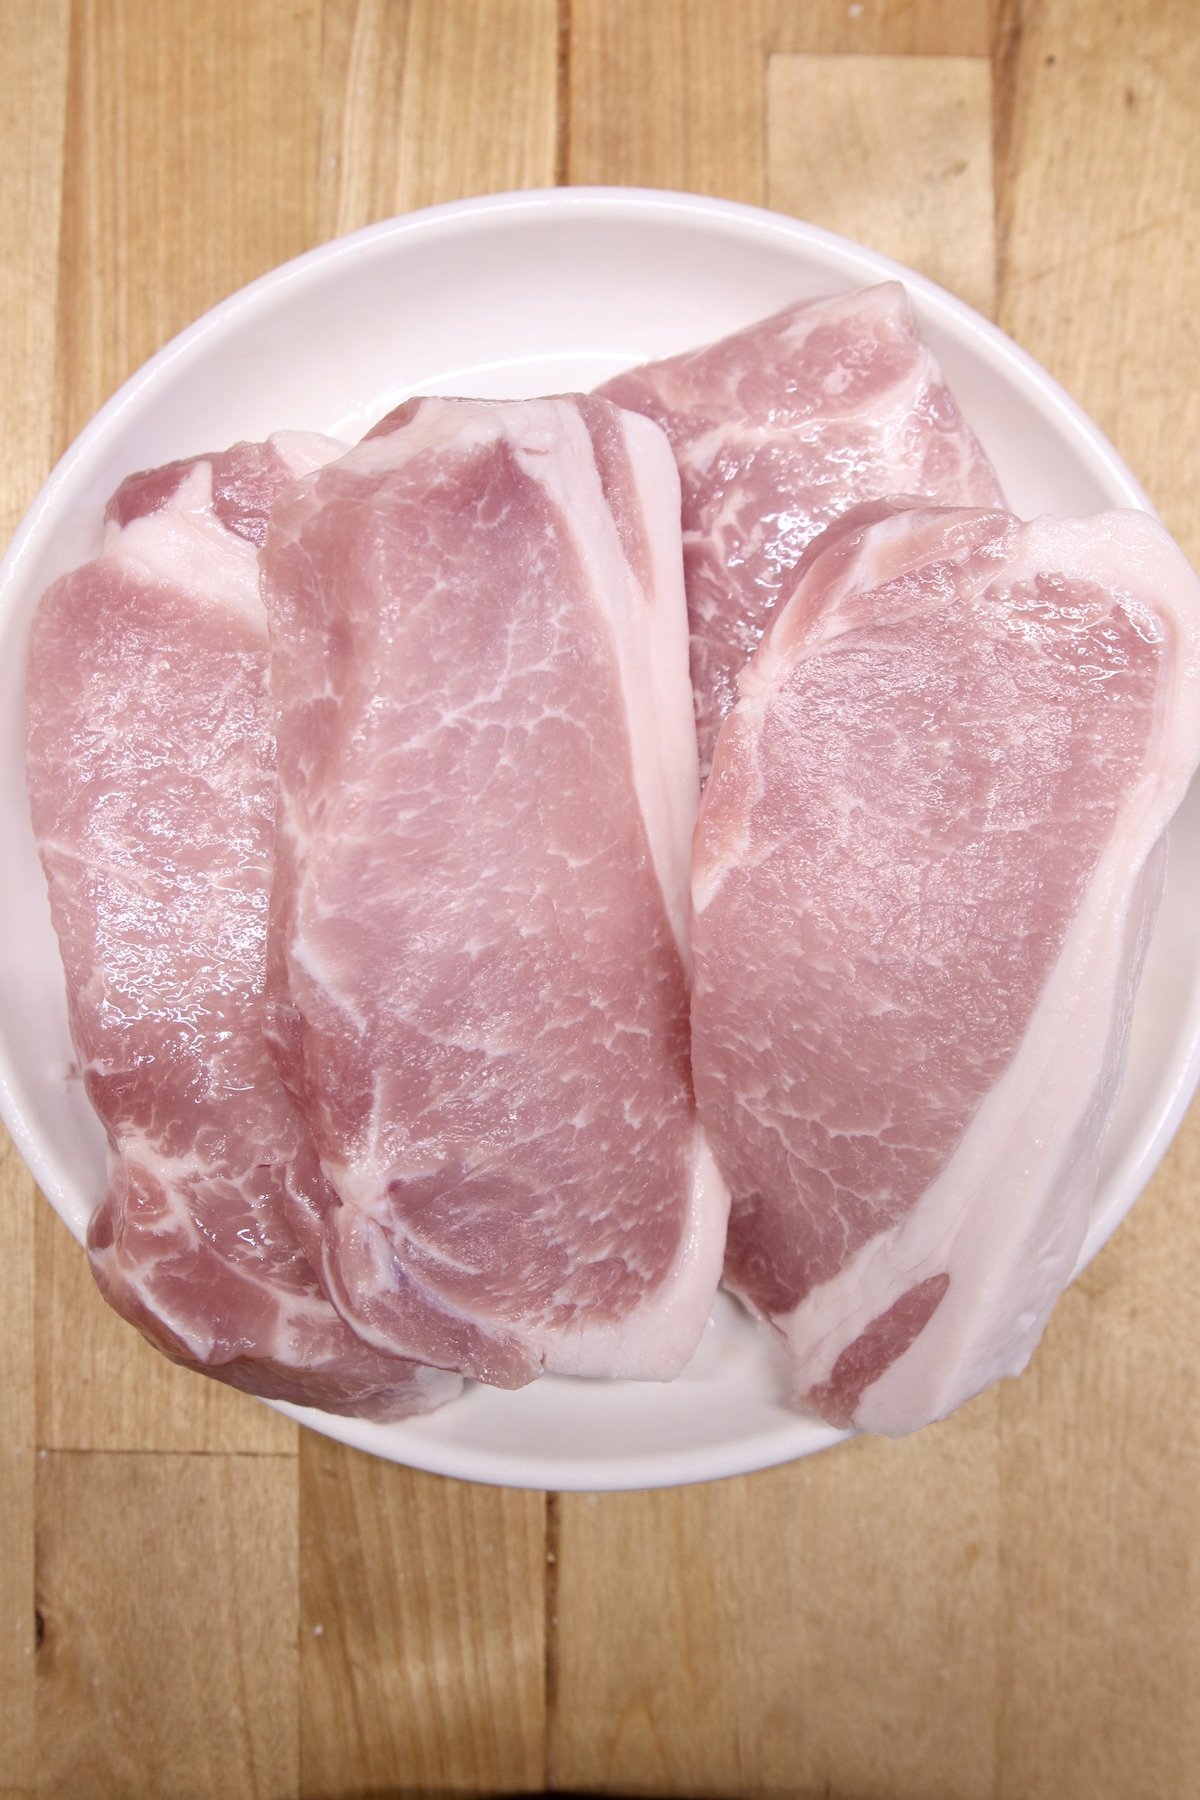 boneless pork chops on a plate